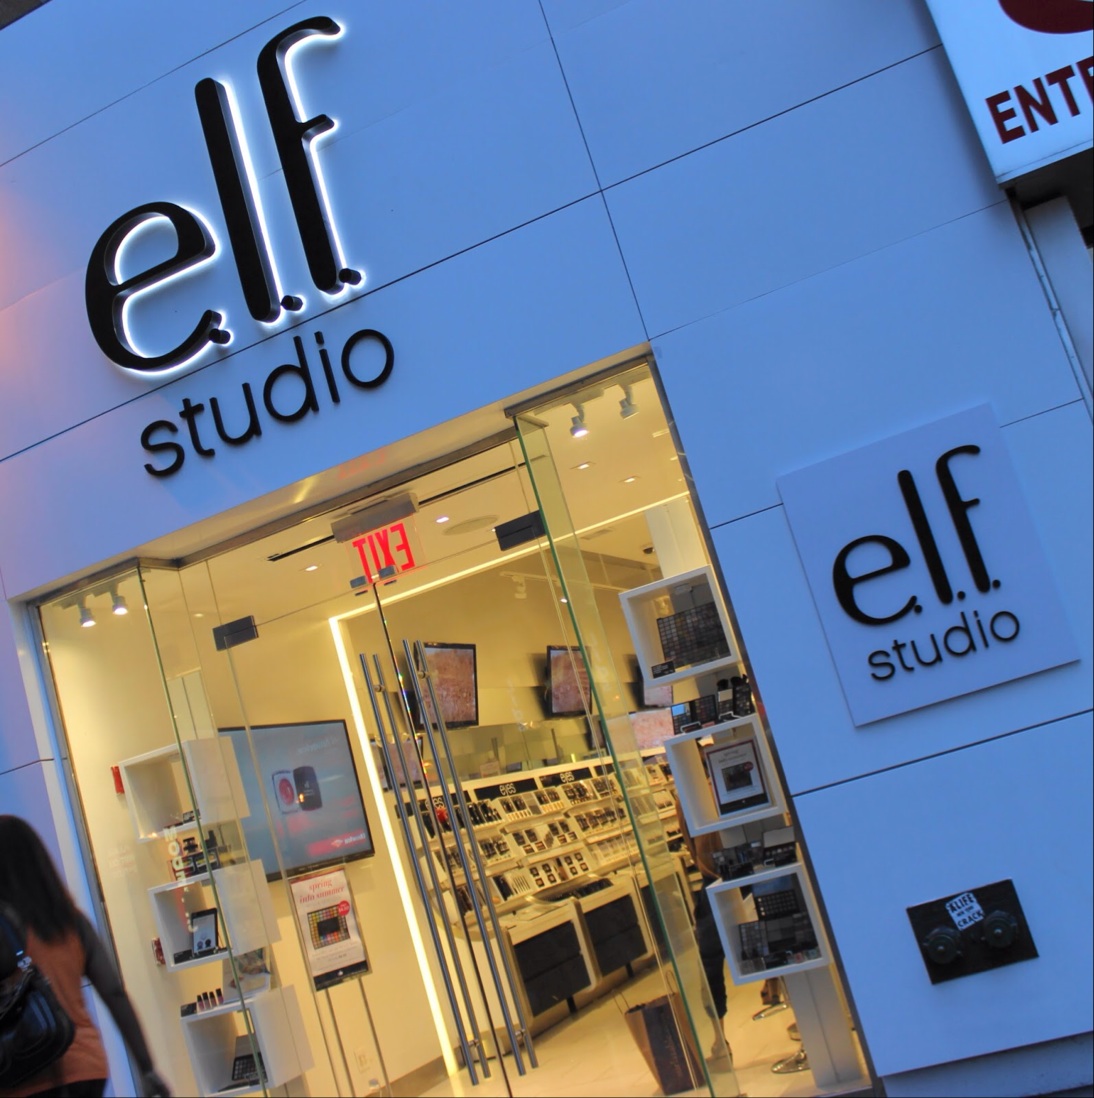 Photo of e.l.f. Studio in New York City, New York, United States - 4 Picture of Point of interest, Establishment, Store